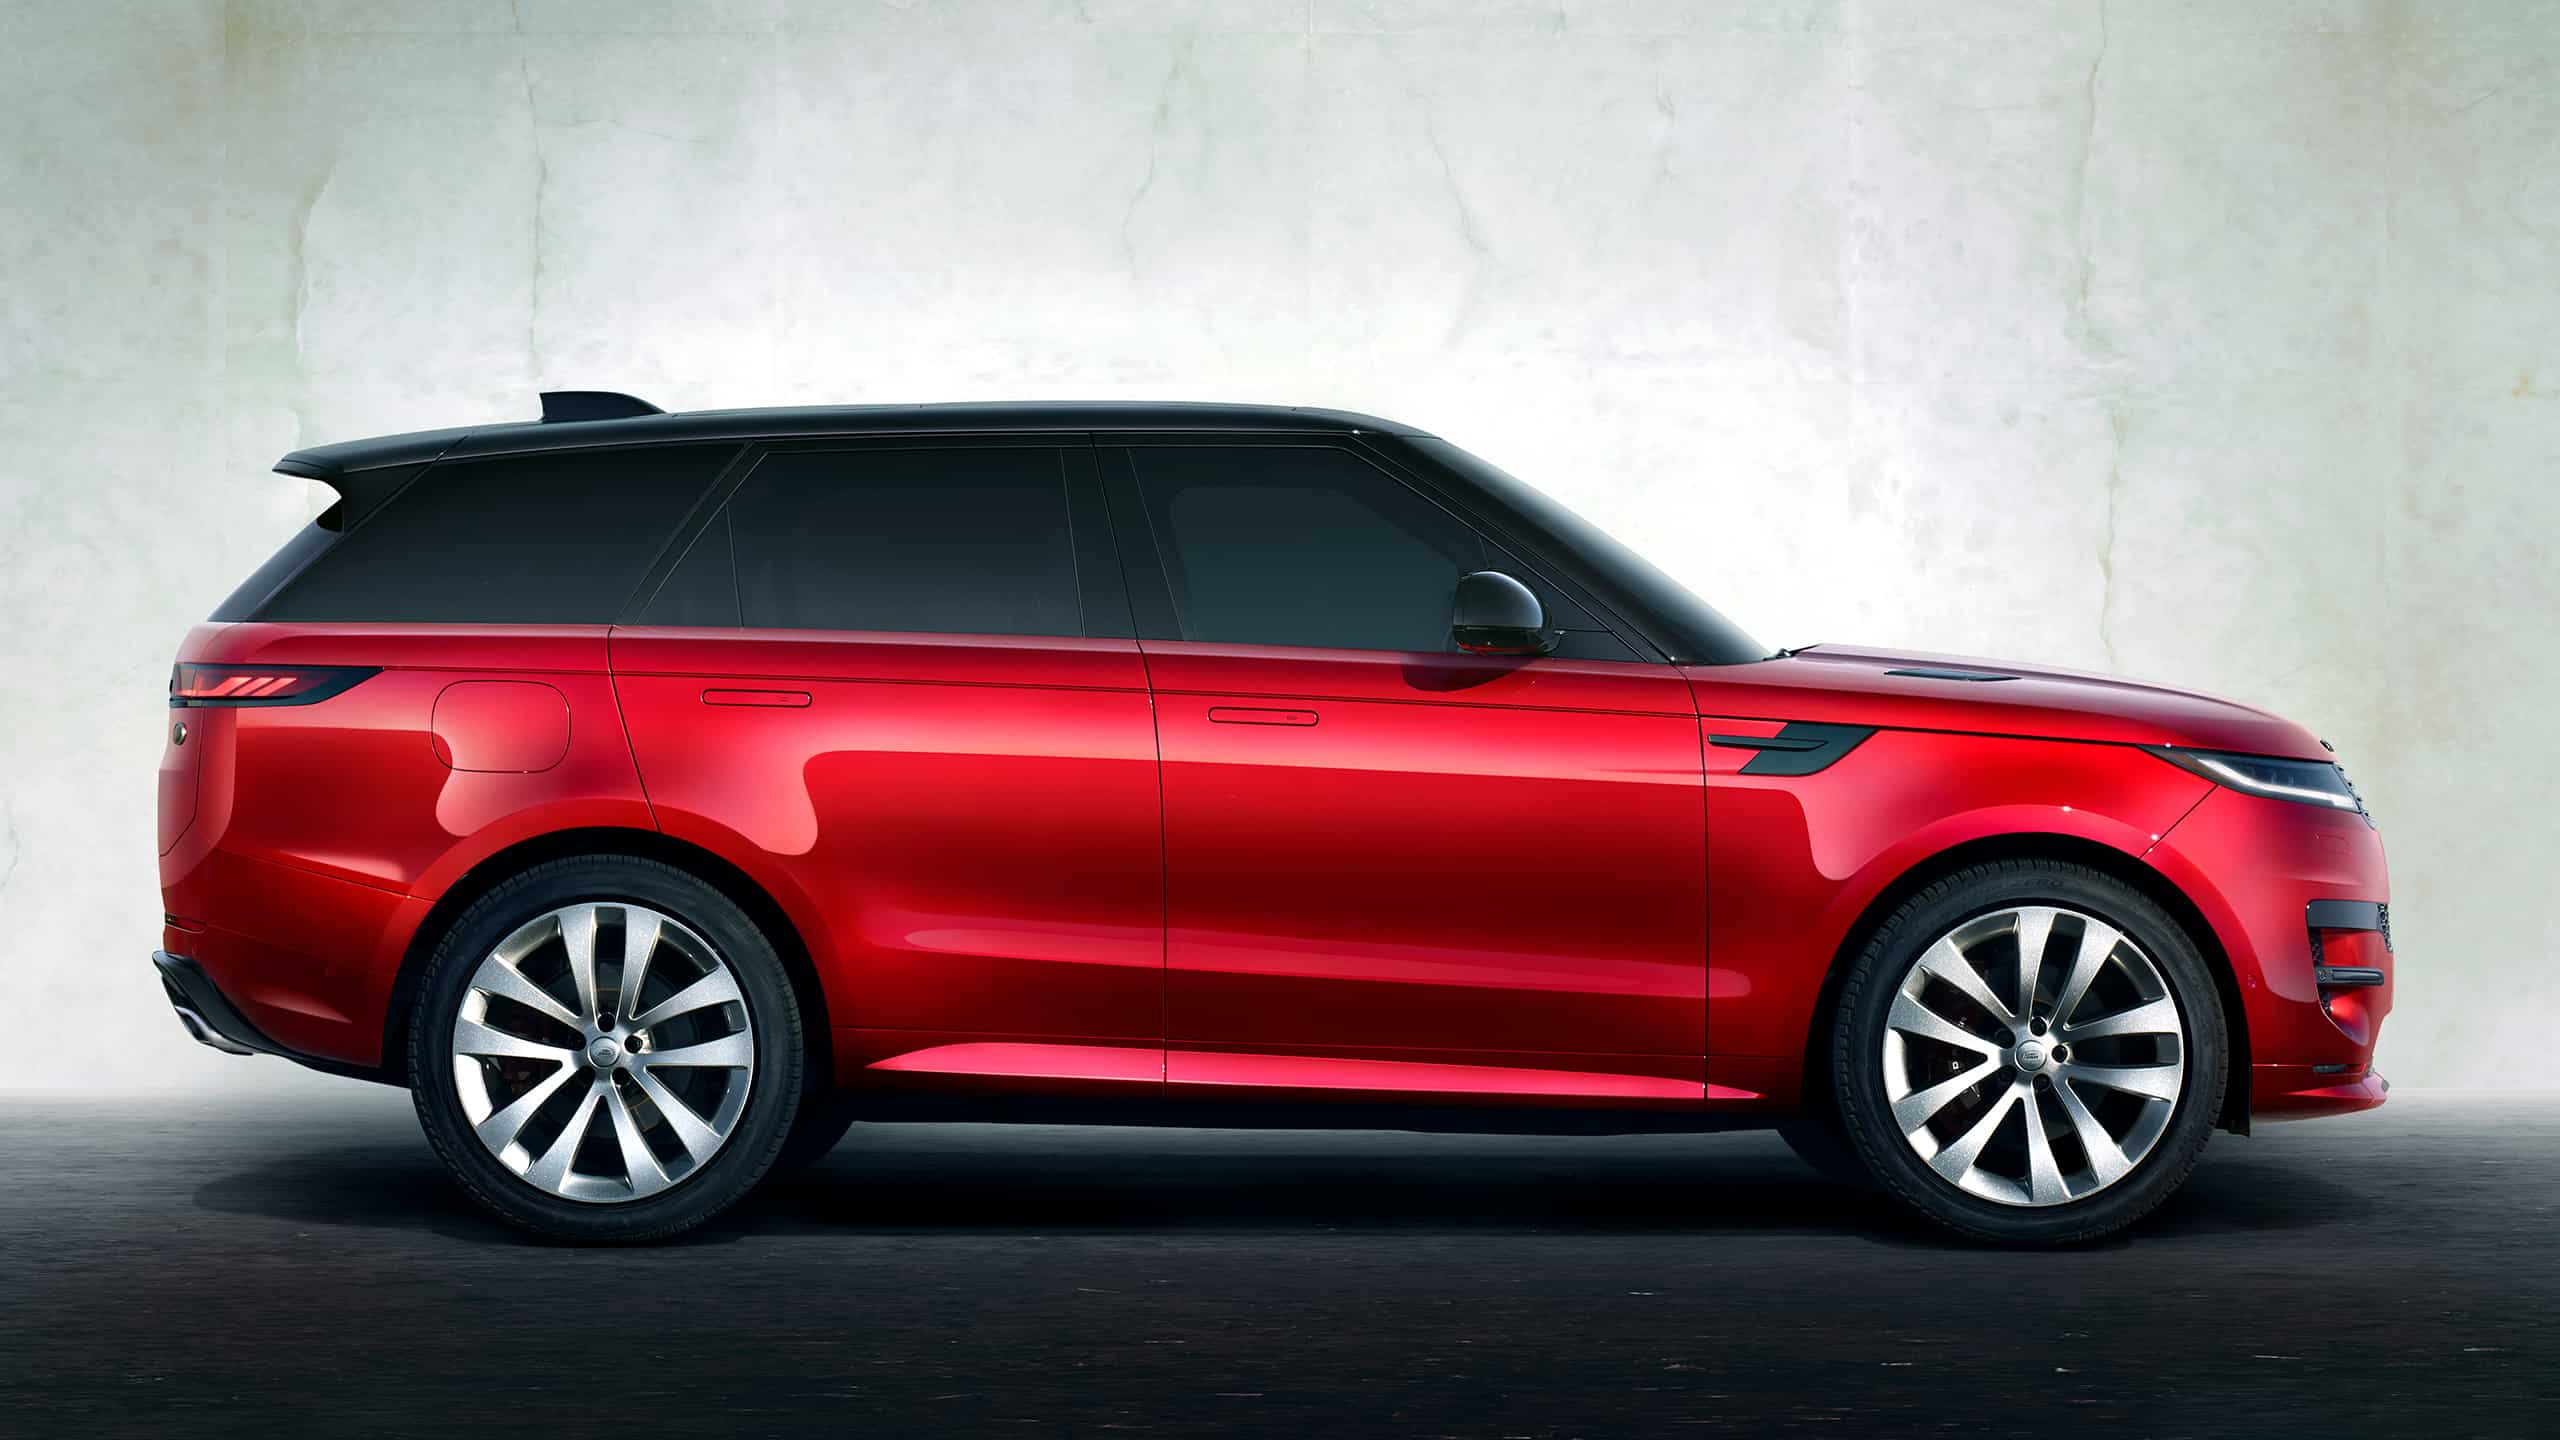 Representation of Range Rover Sport on grey textured background